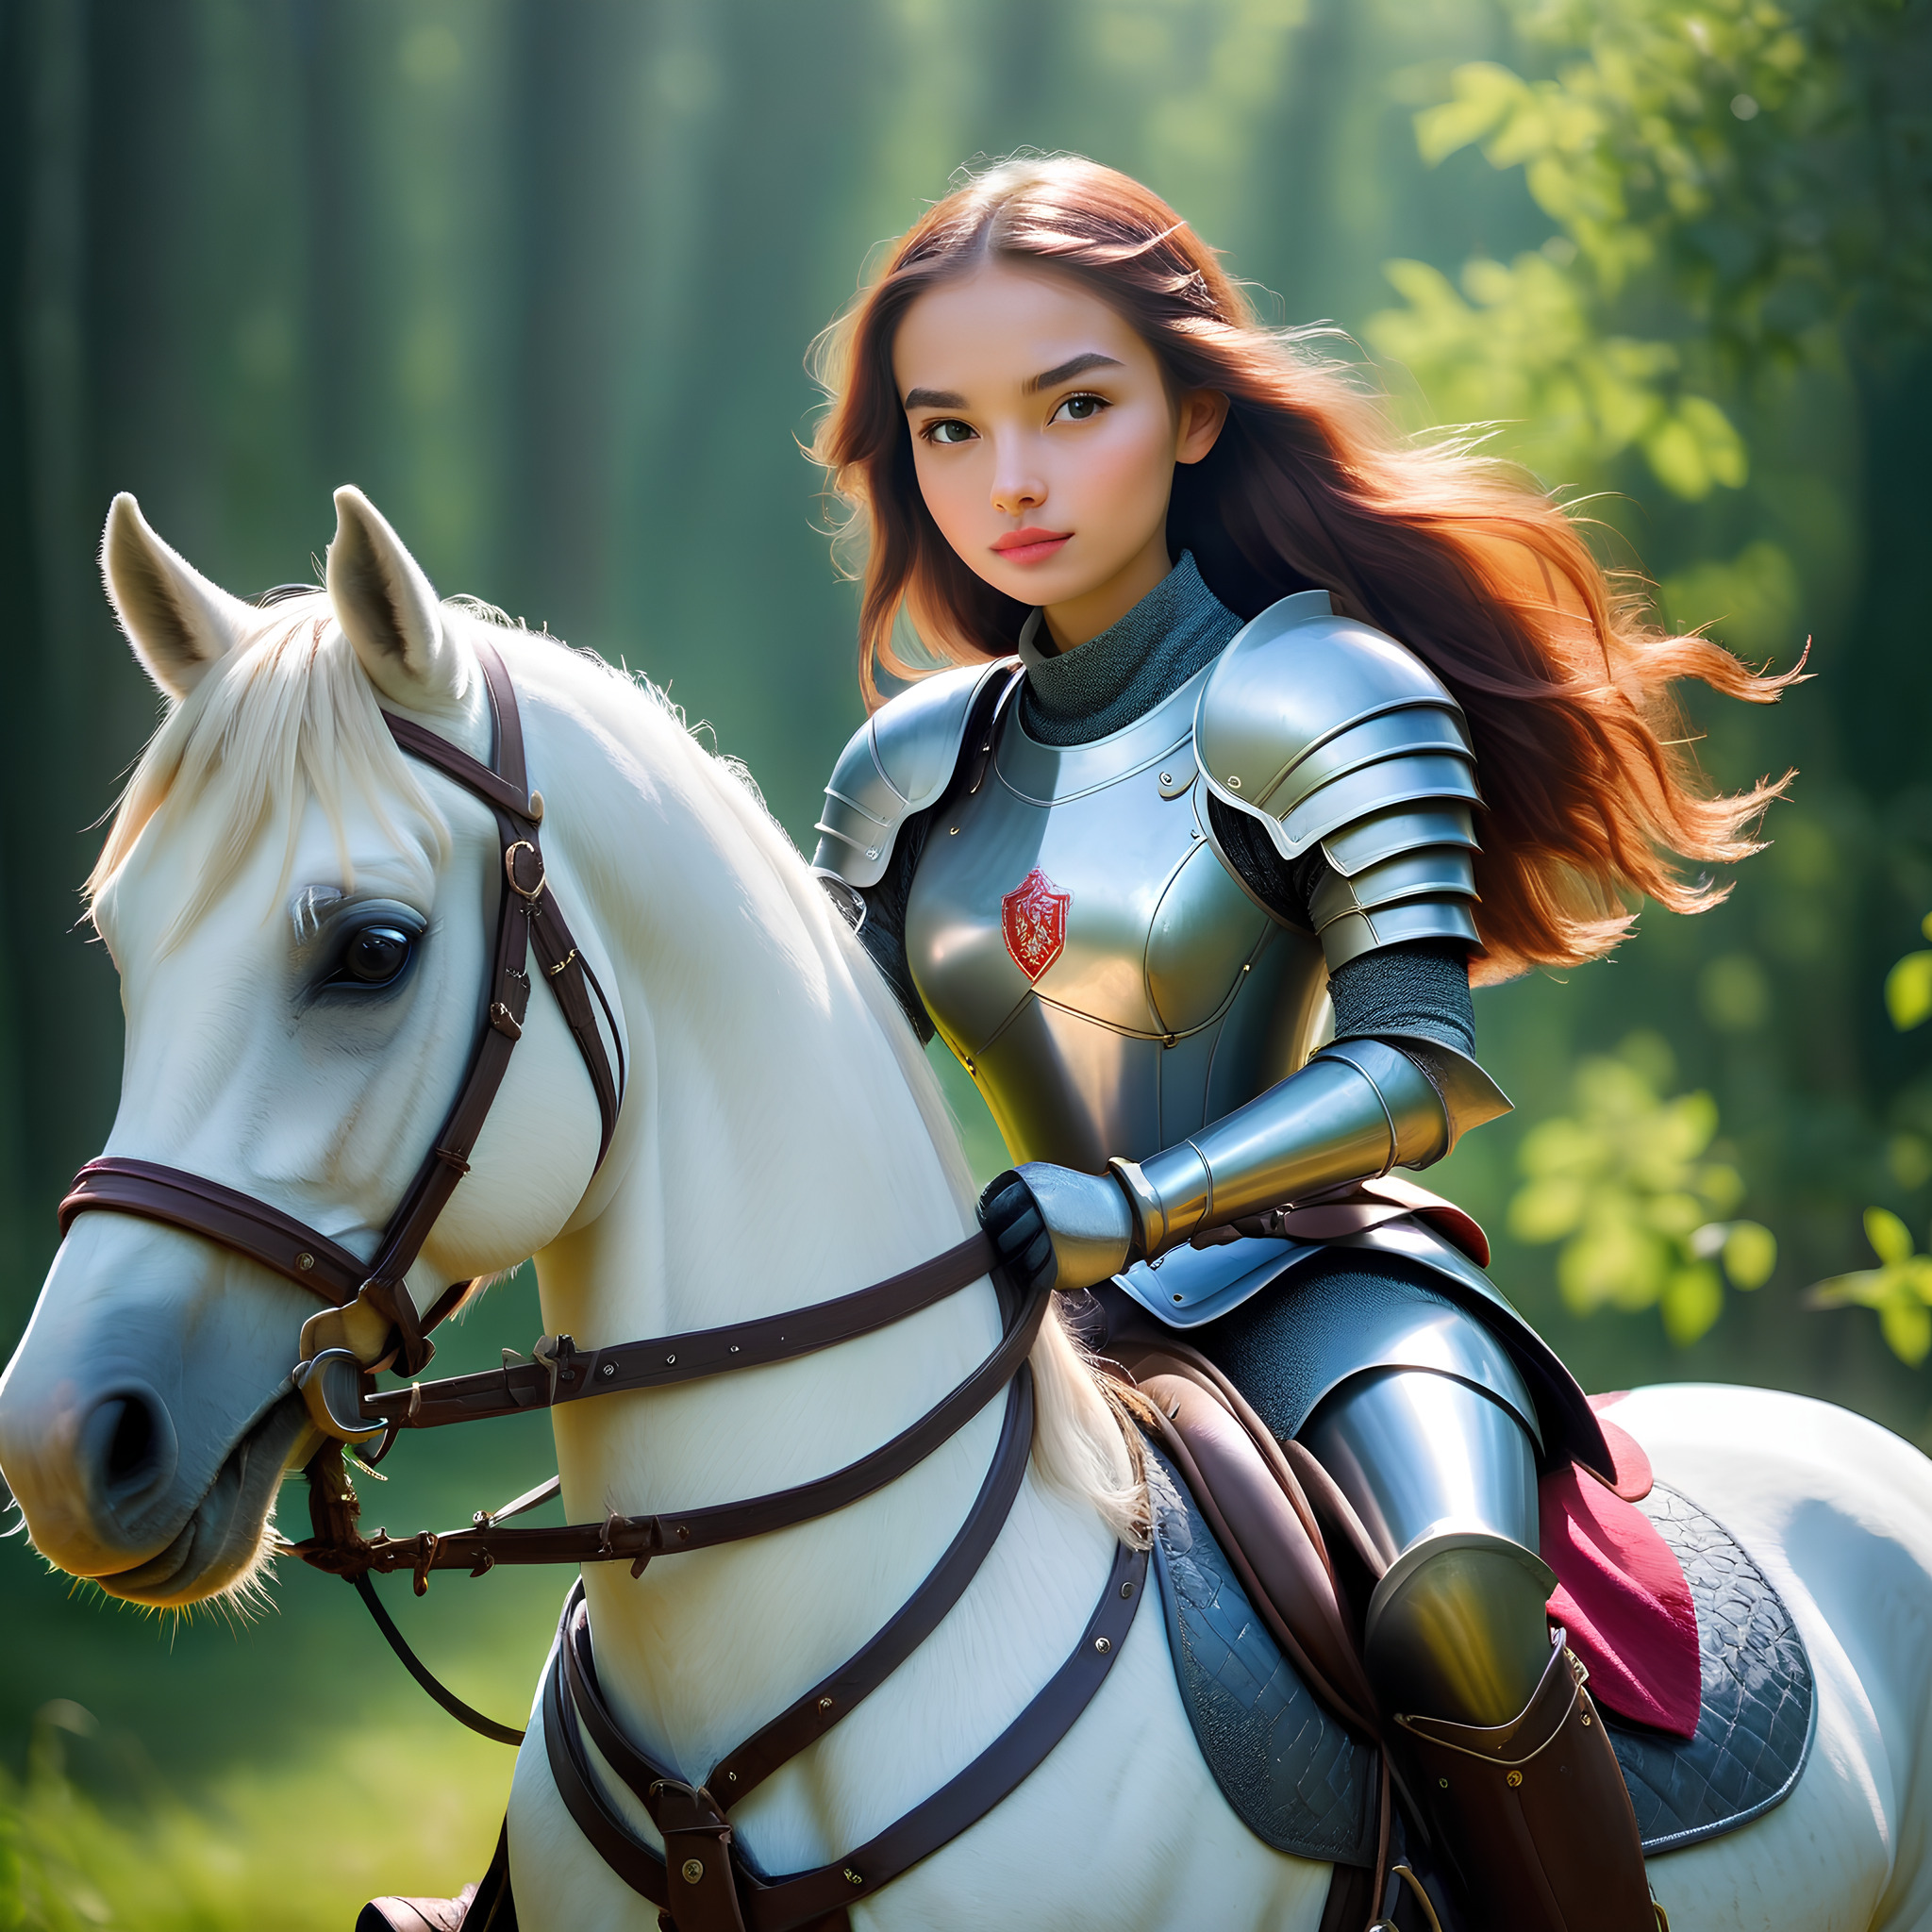 Бесплатное фото Девушка рыцарь на лошади